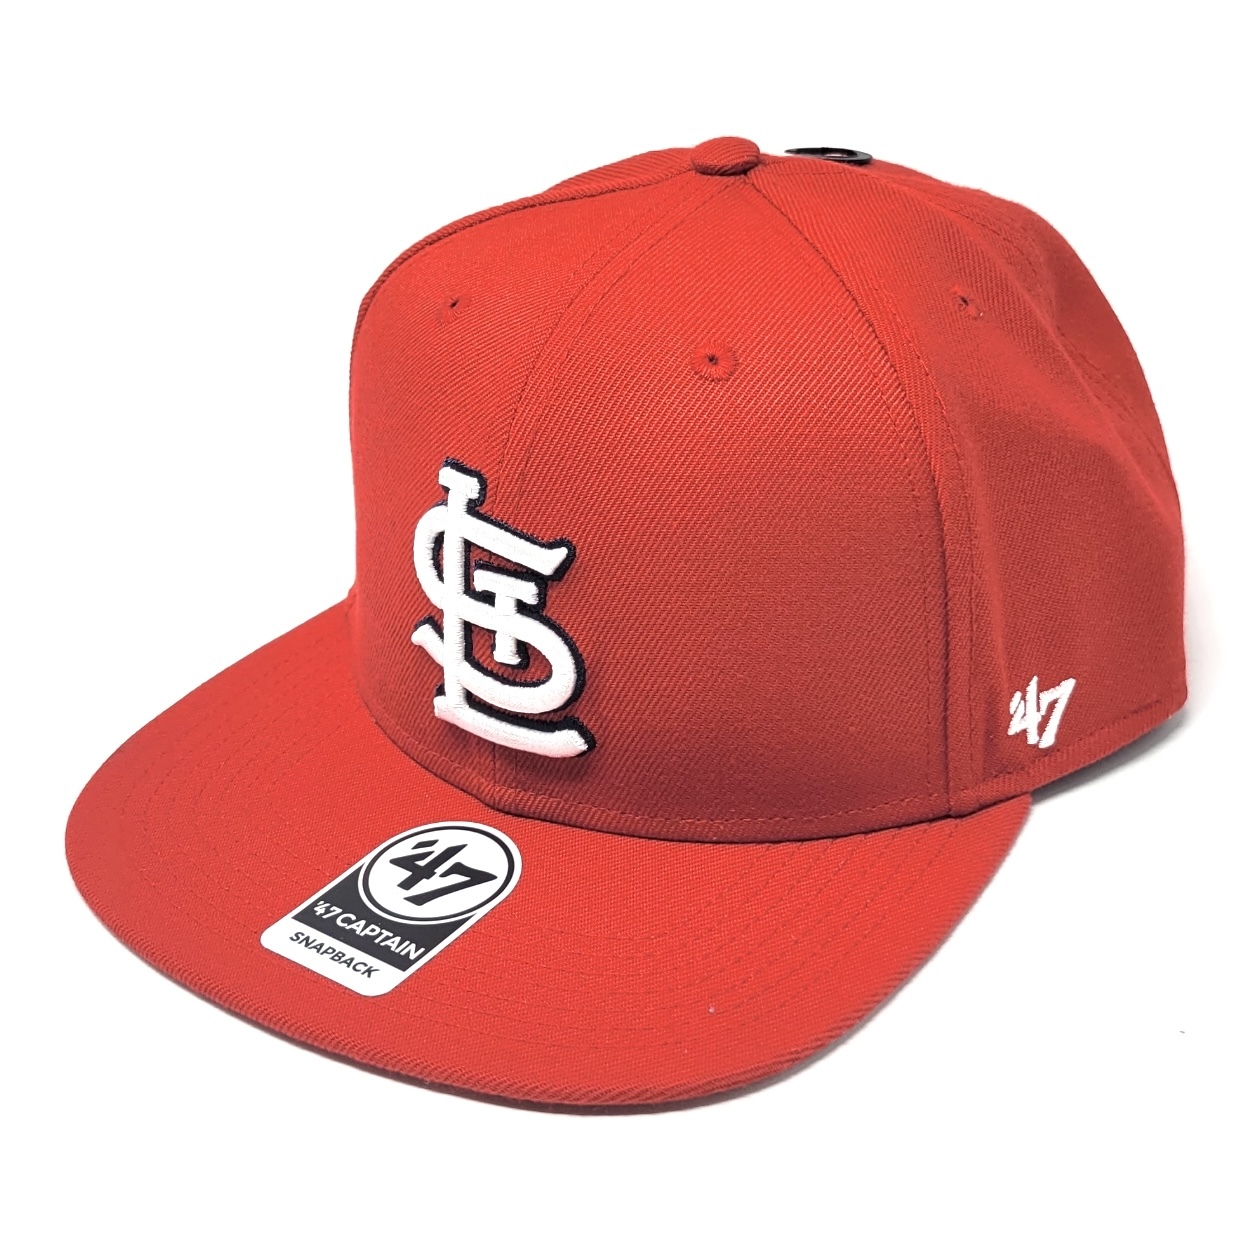 St. Louis Cardinals Pinstripe Captain Natural 47 Brand Adjustable Hat